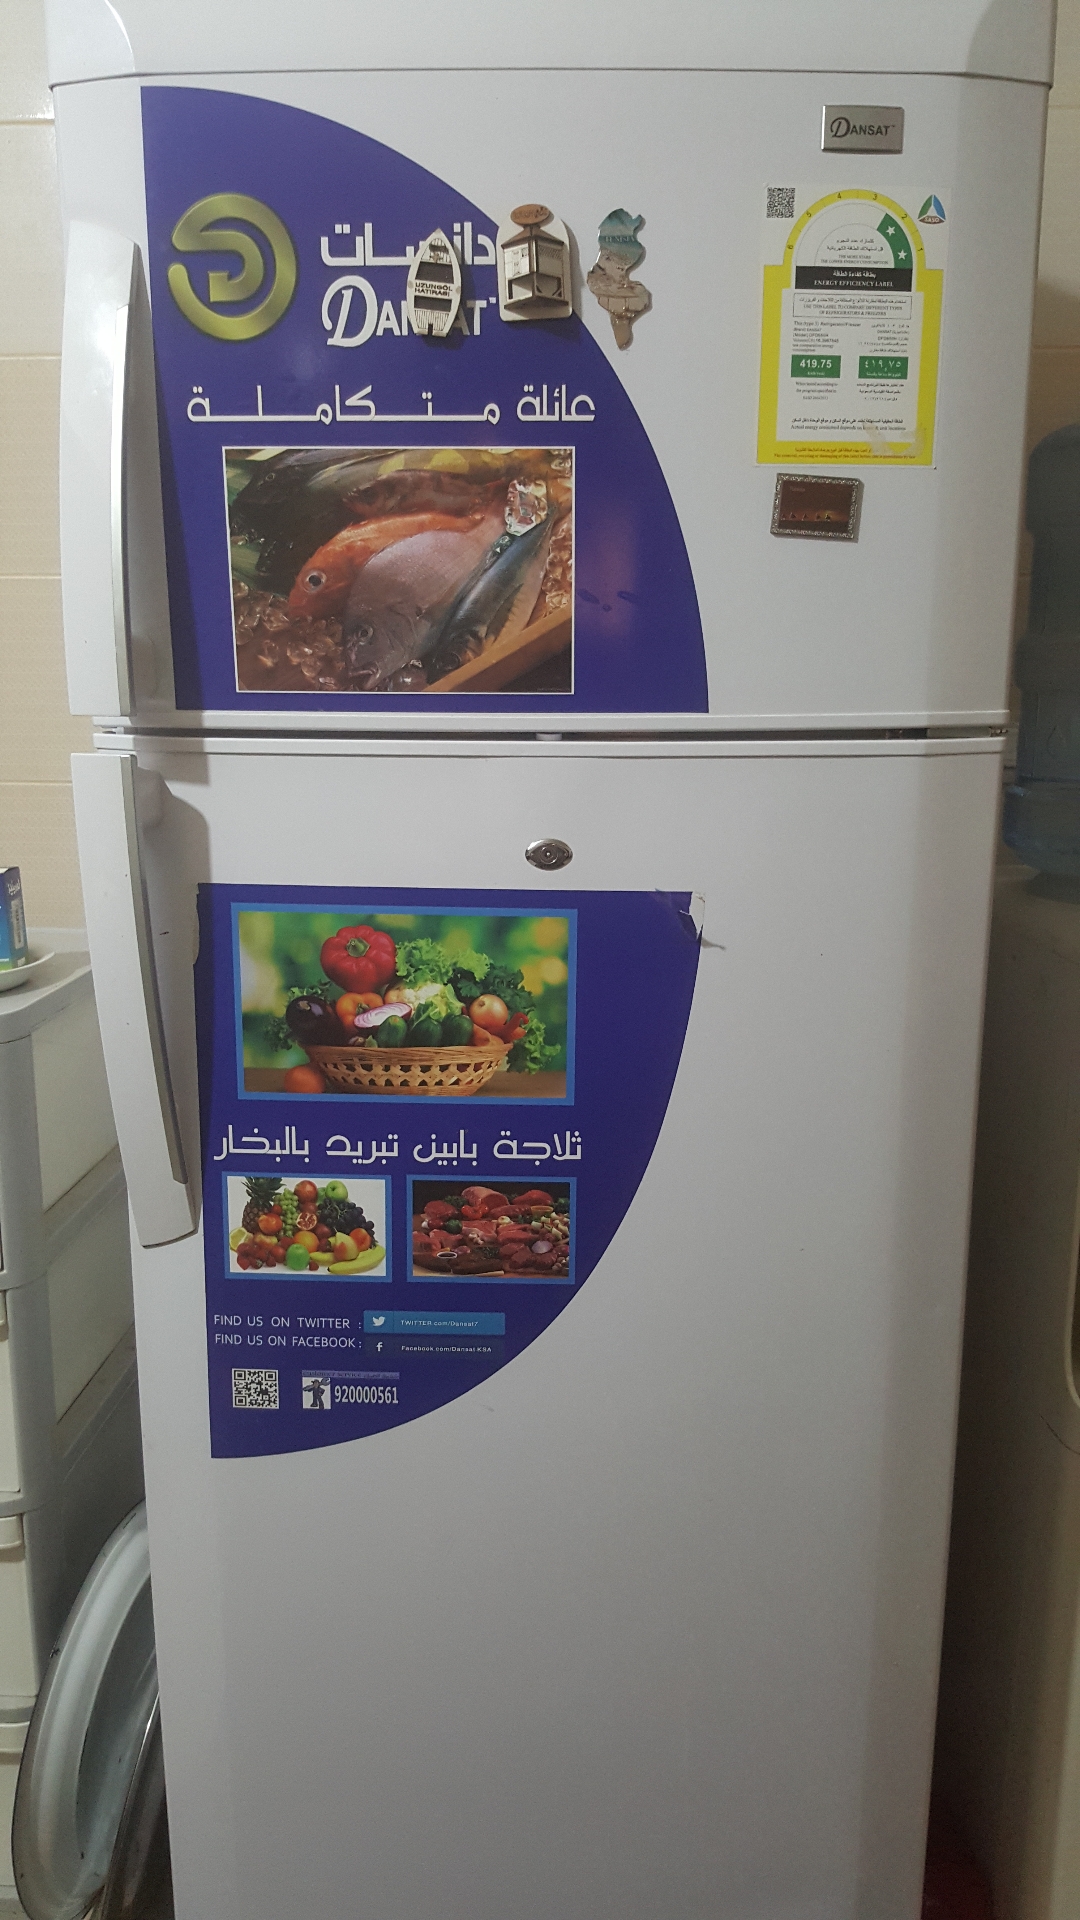 LG latest model fridge with 2doors up and down-  ثلاجه دانسات لا تنسَ أنك...